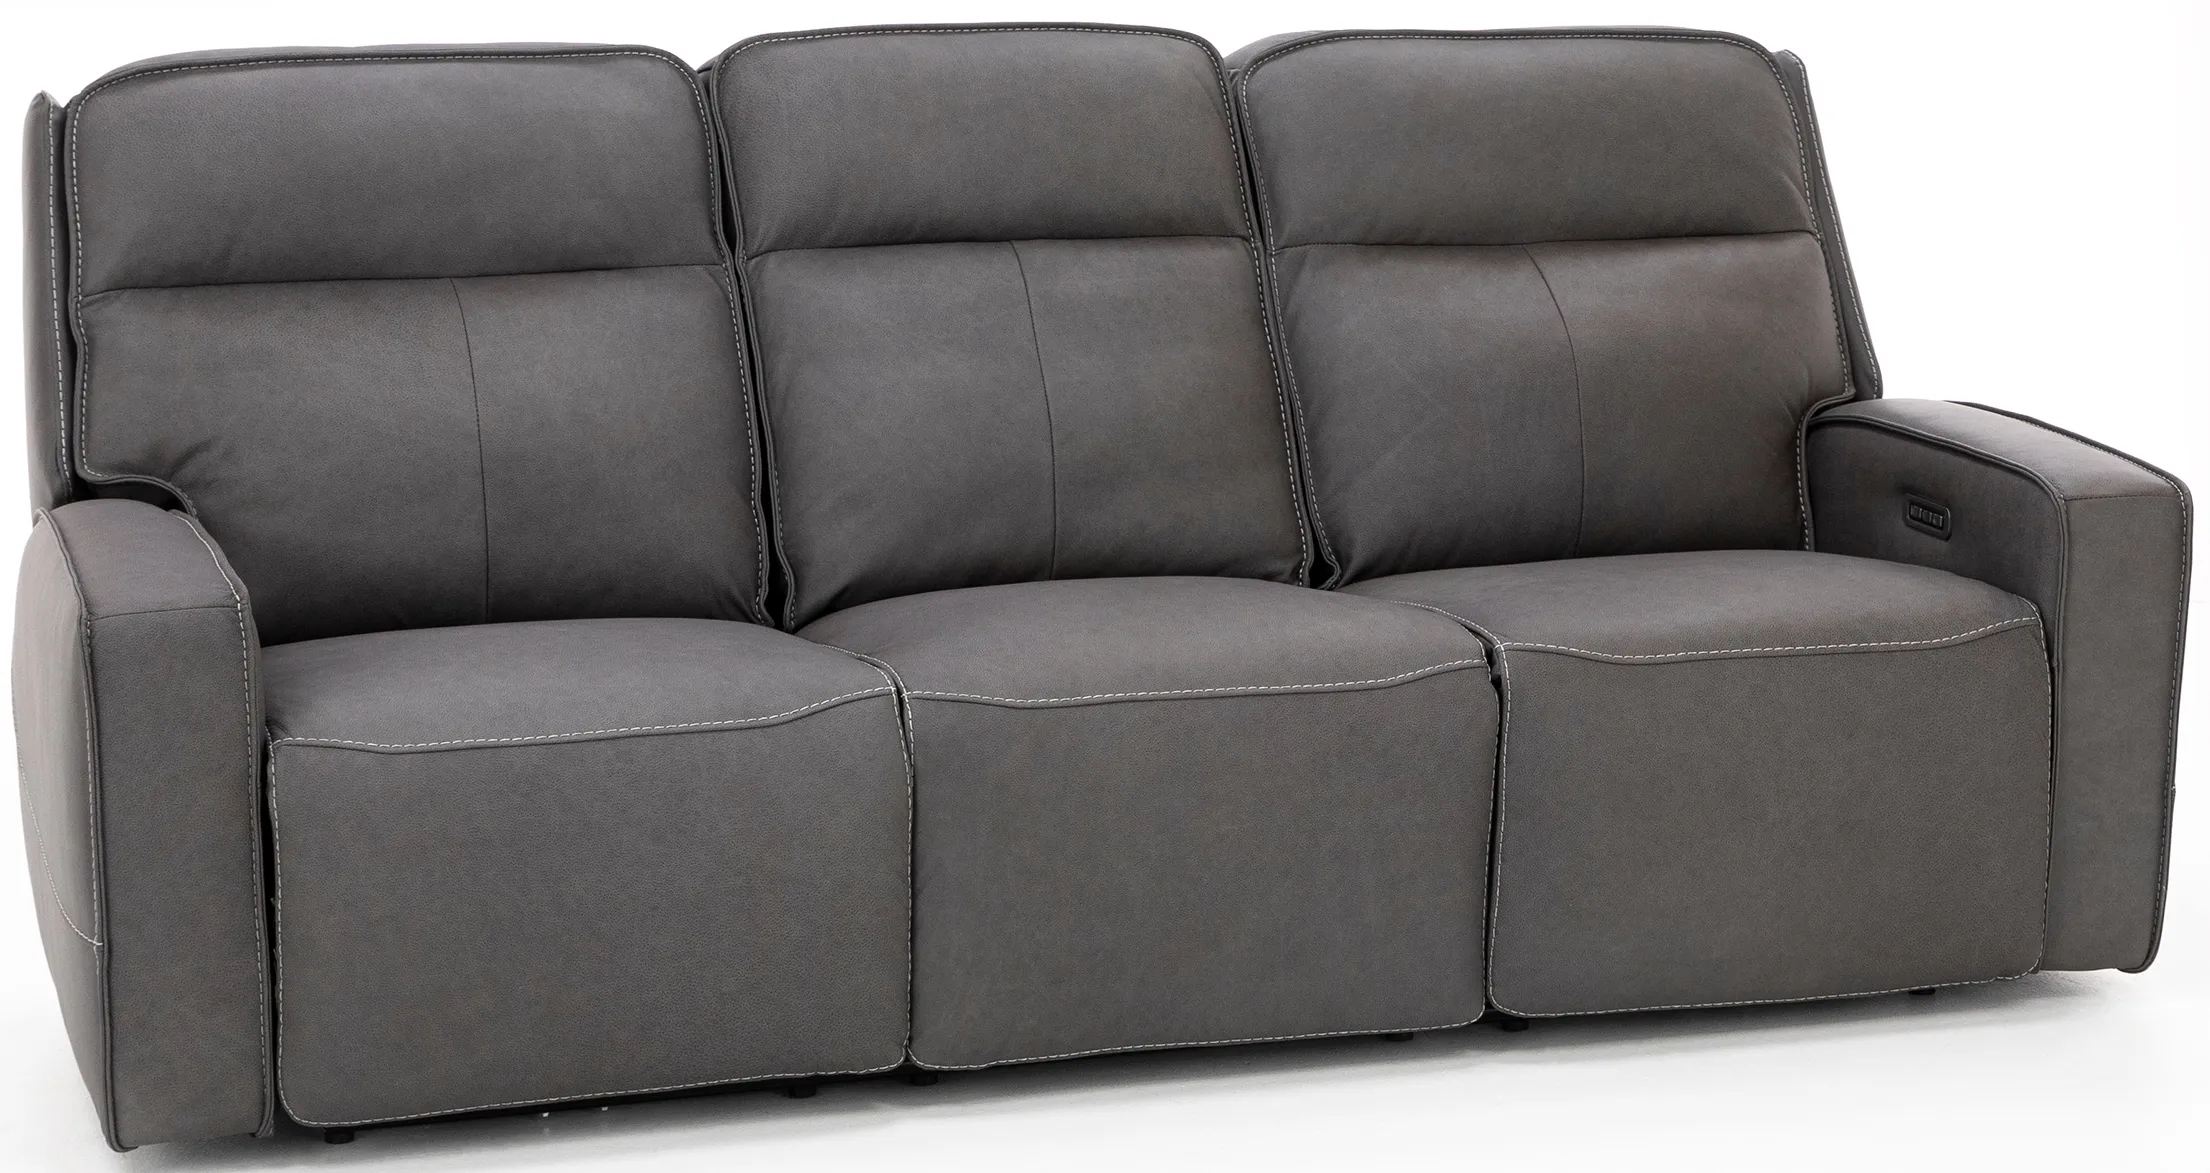 Morgan Leather Fully Loaded Reclining Sofa in Smoke